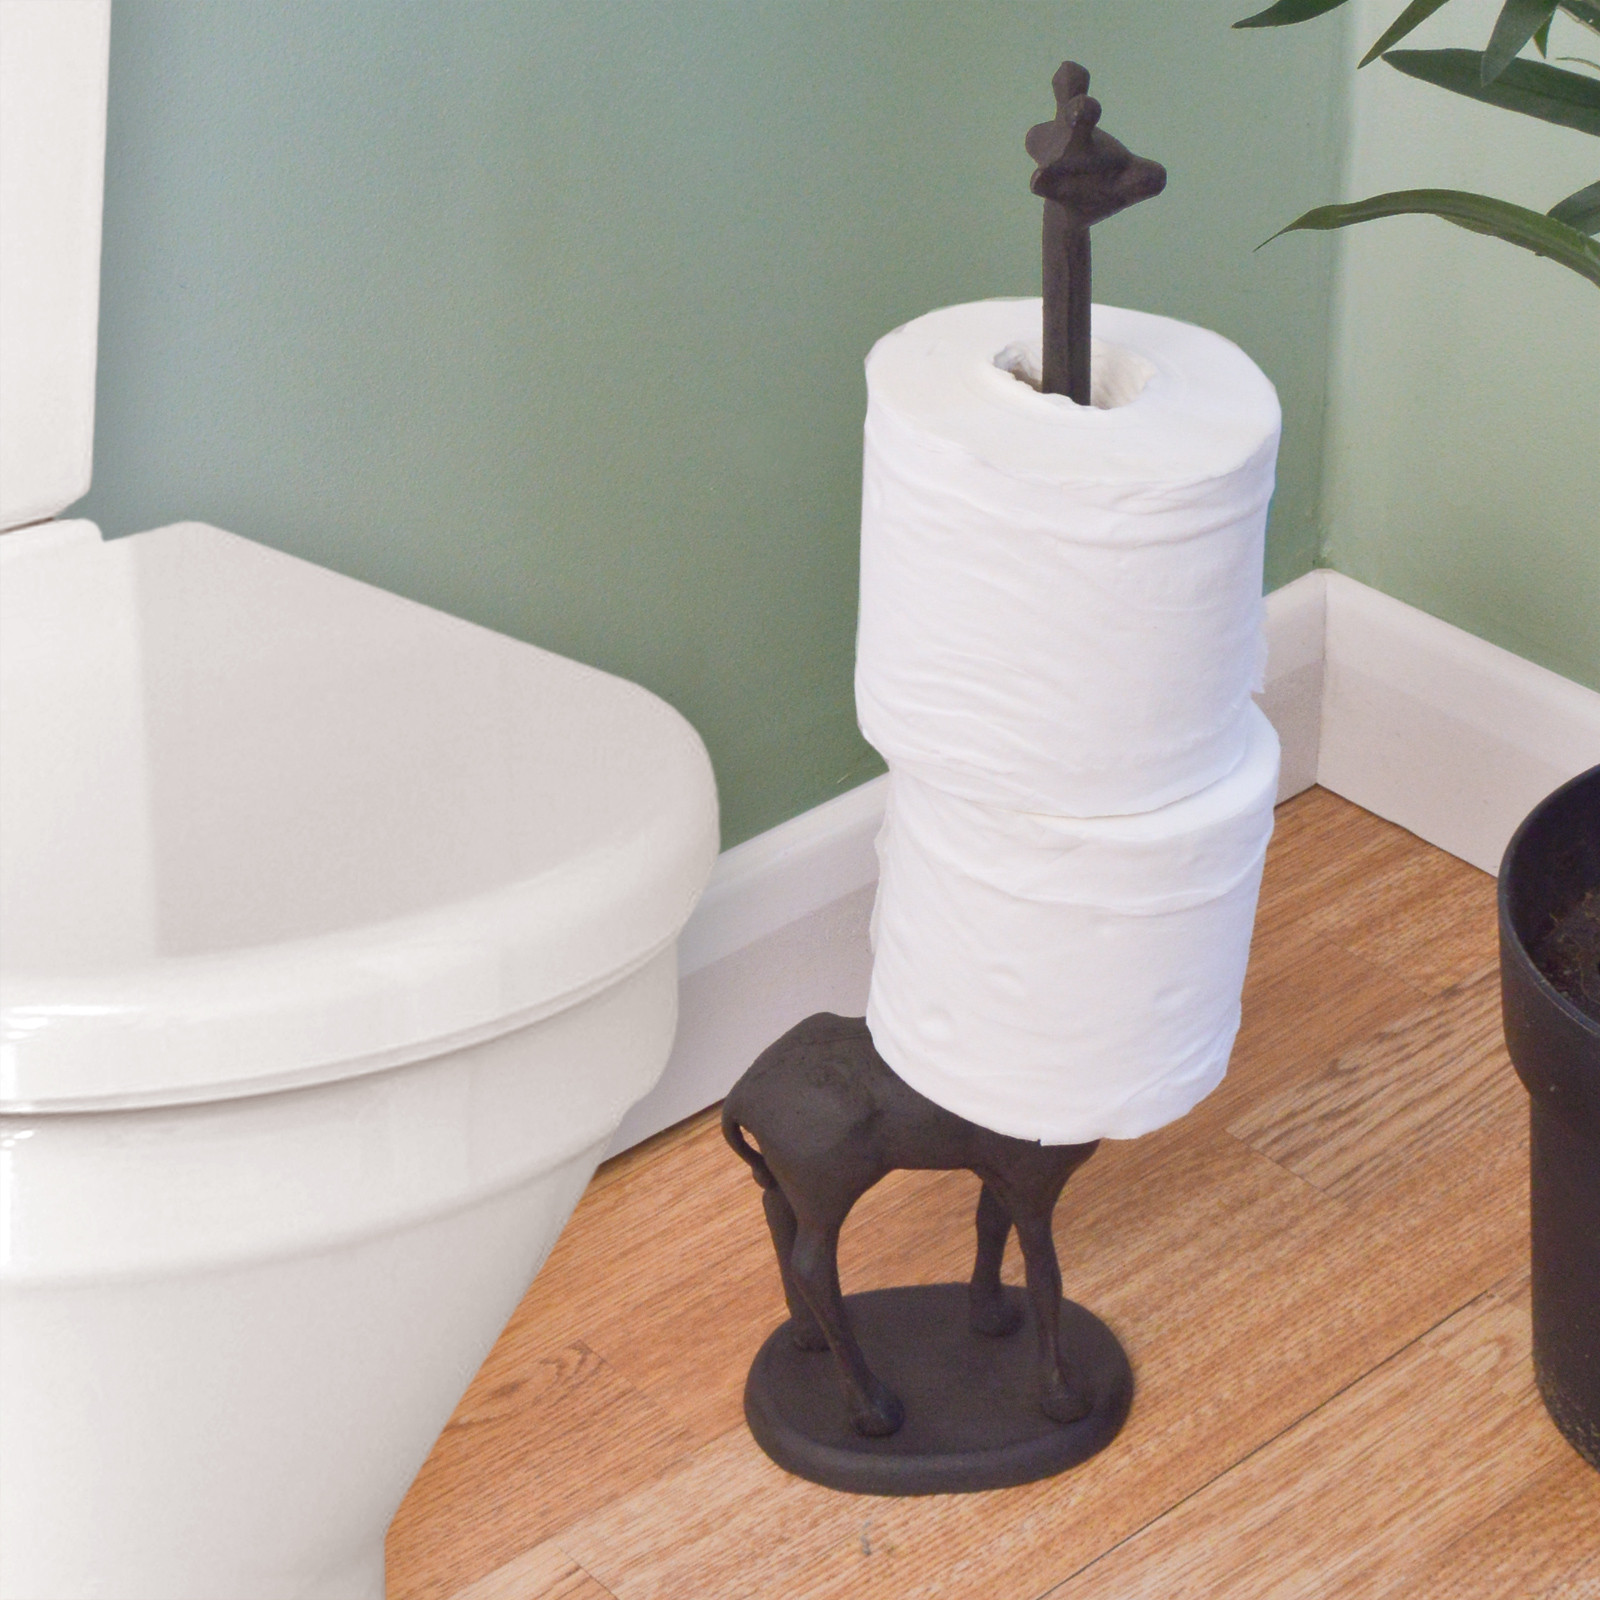 Best ideas about Bathroom Tissue Holder
. Save or Pin Metal Giraffe Toilet Roll Kitchen Tissue Free Standing Now.